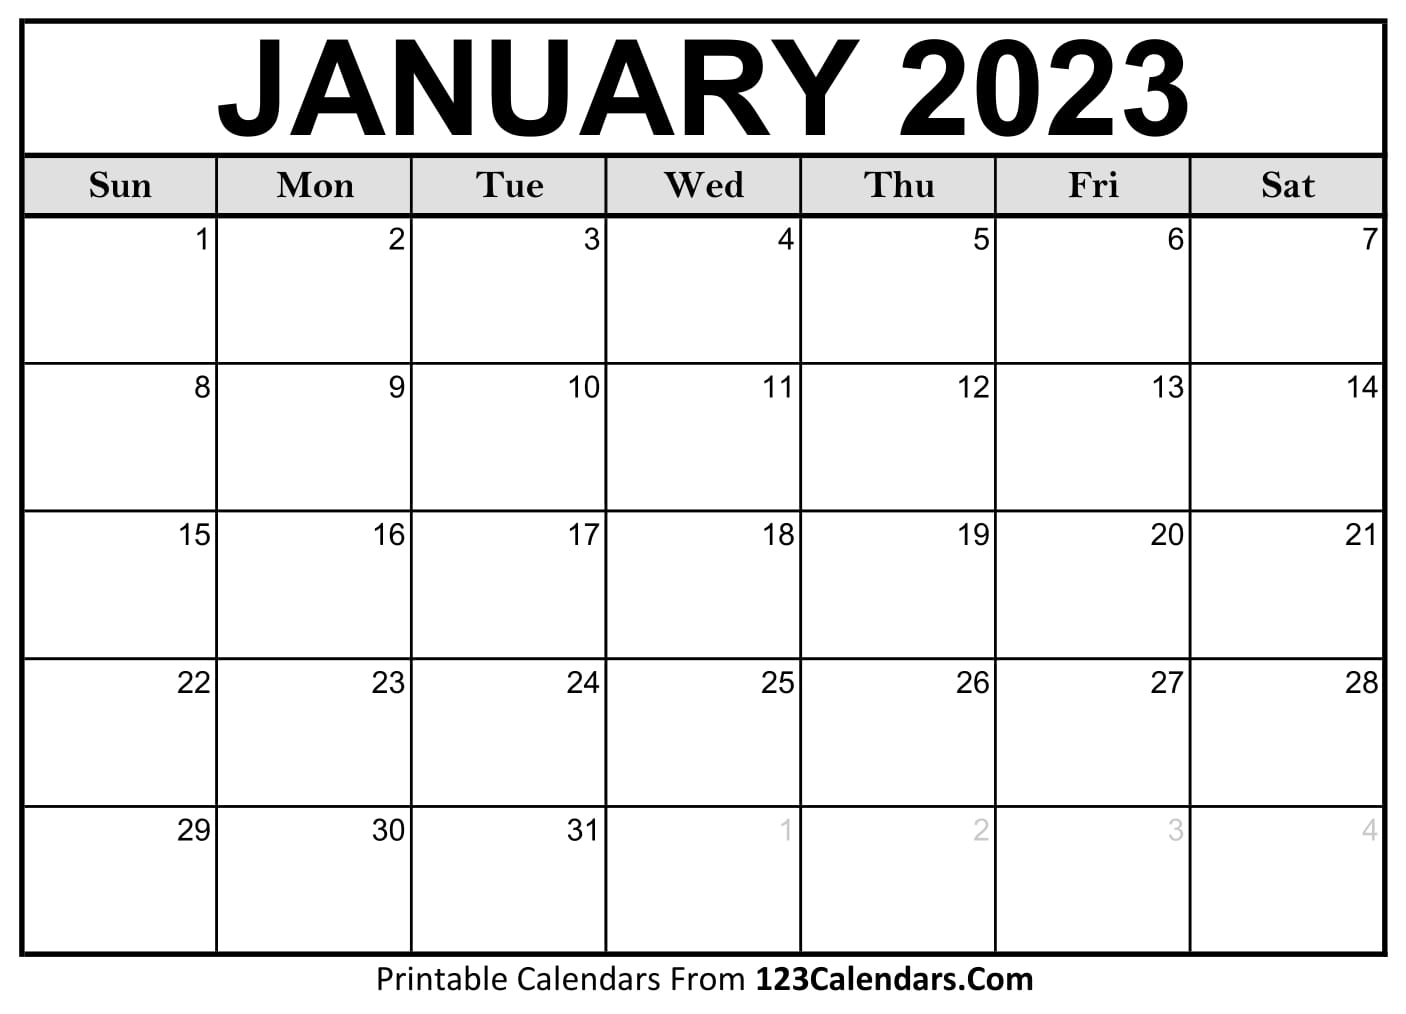 january-2023-calendar-free-printable-calendar-printable-january-2023